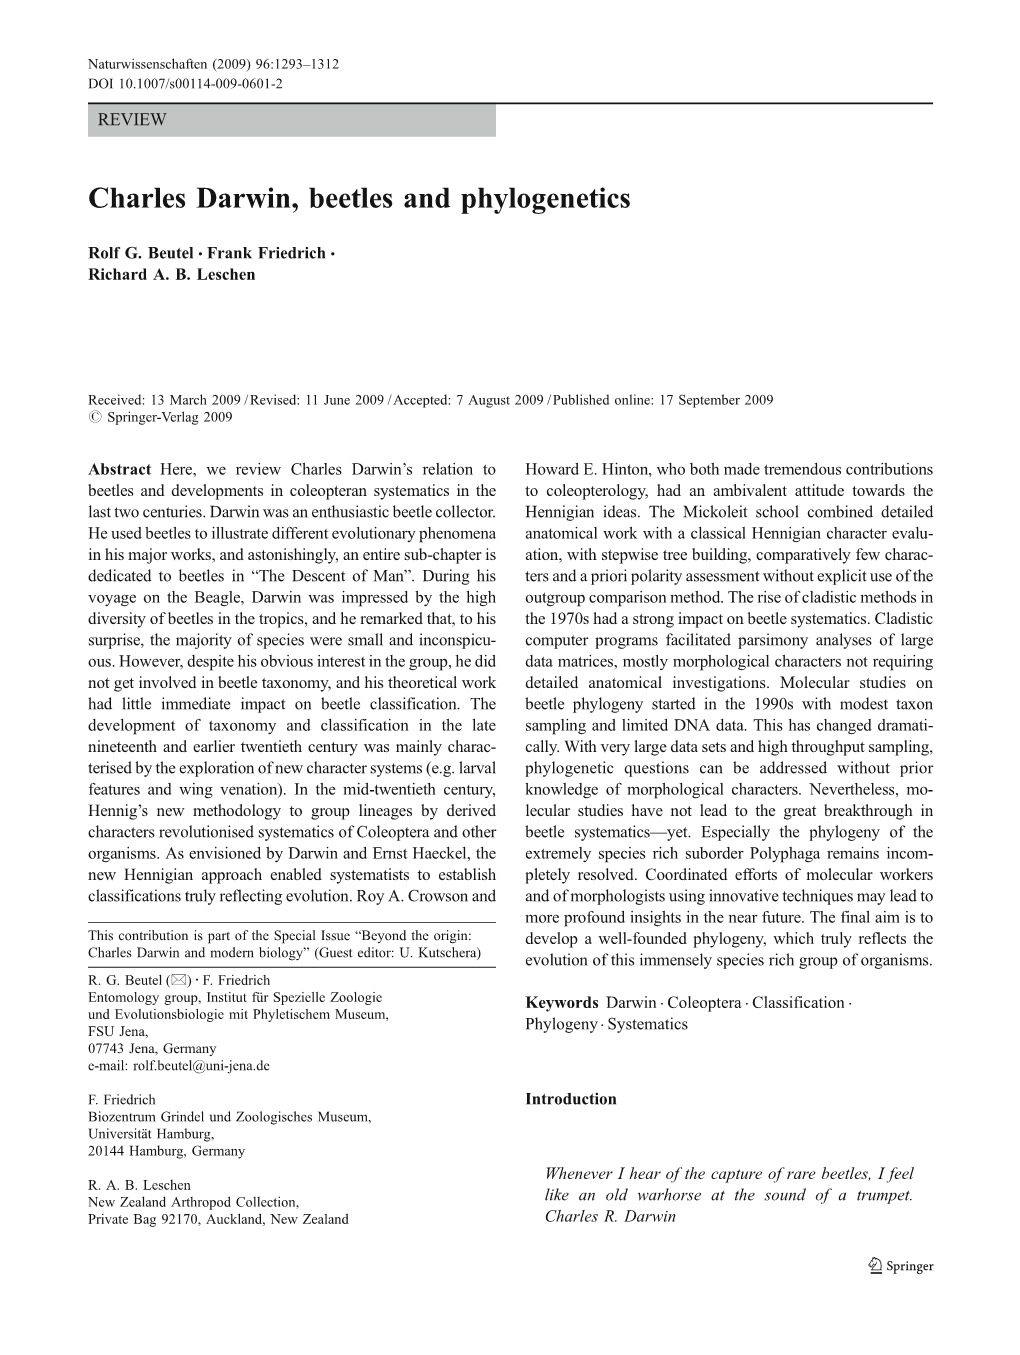 Charles Darwin, Beetles and Phylogenetics